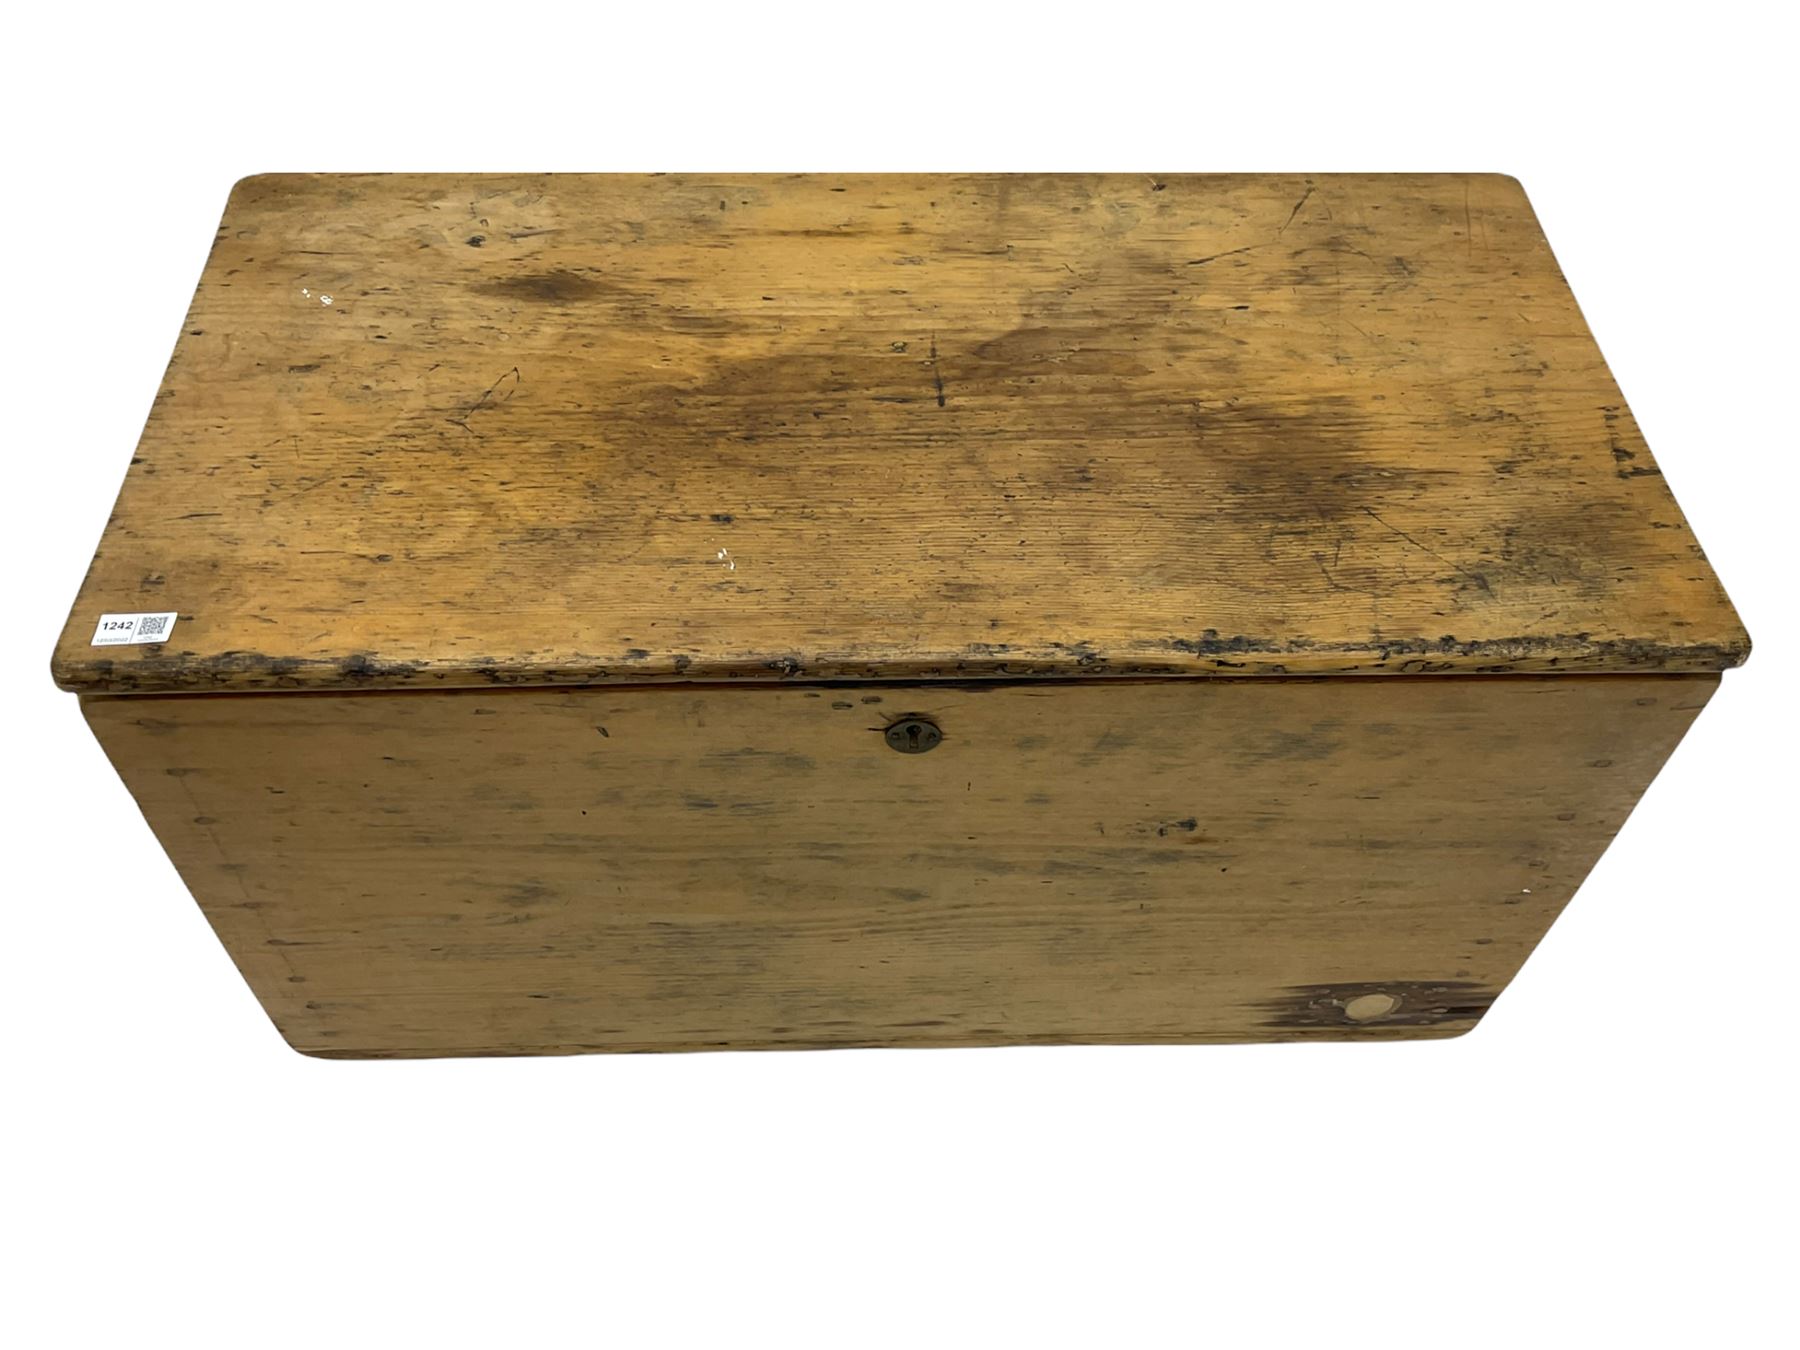 19th century pine blanket box - Image 2 of 8